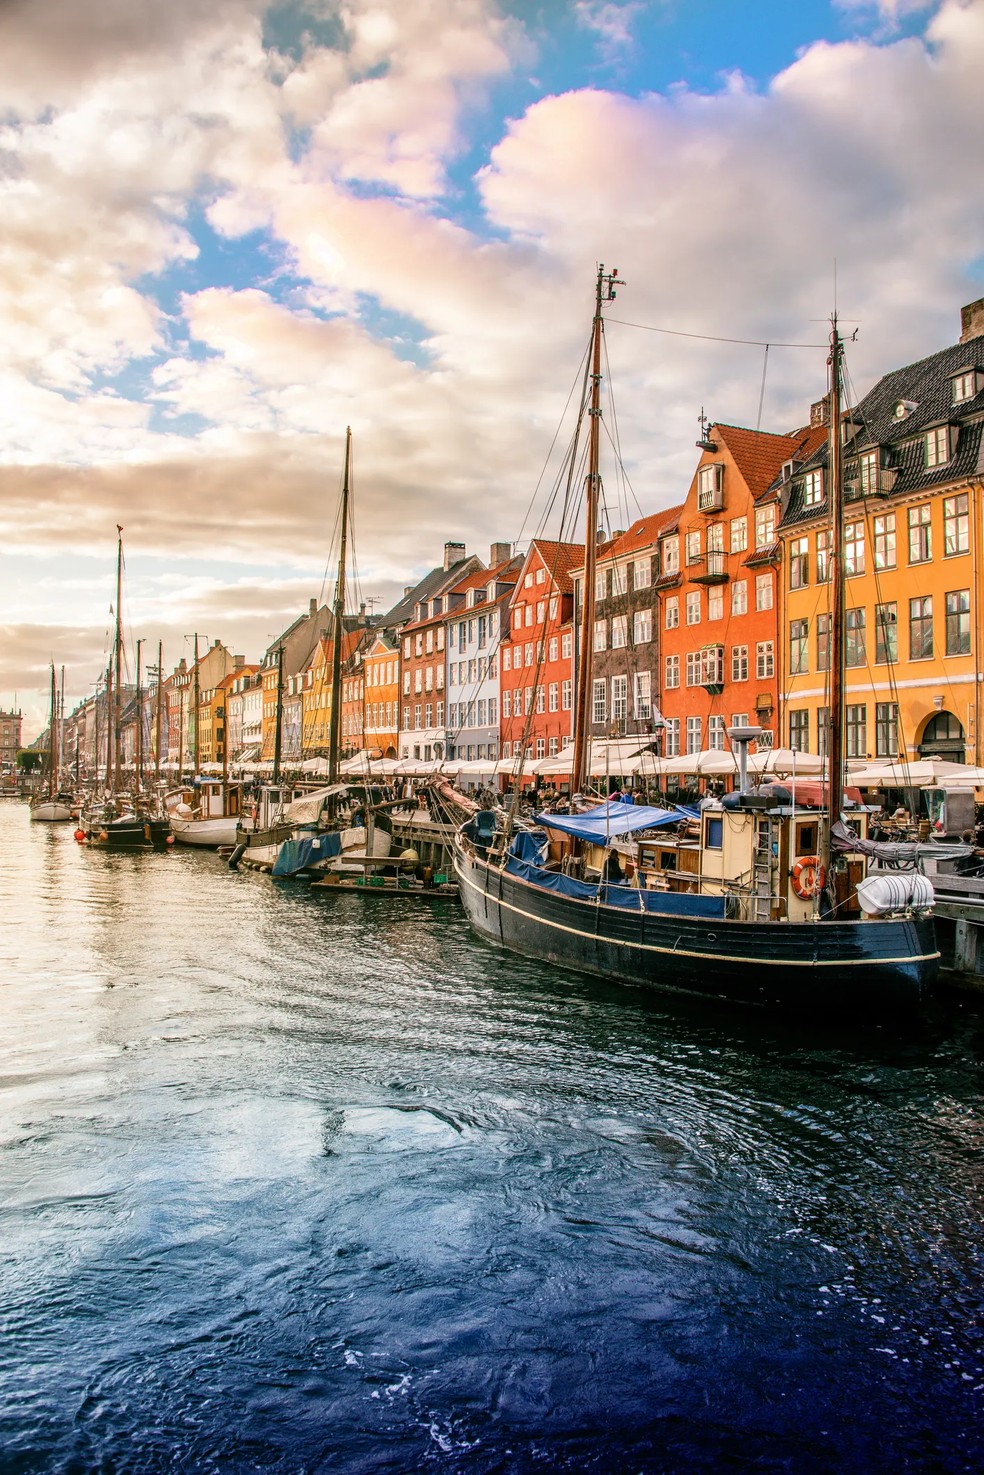 Copenhague, na Dinamarca — Foto: Getty Images